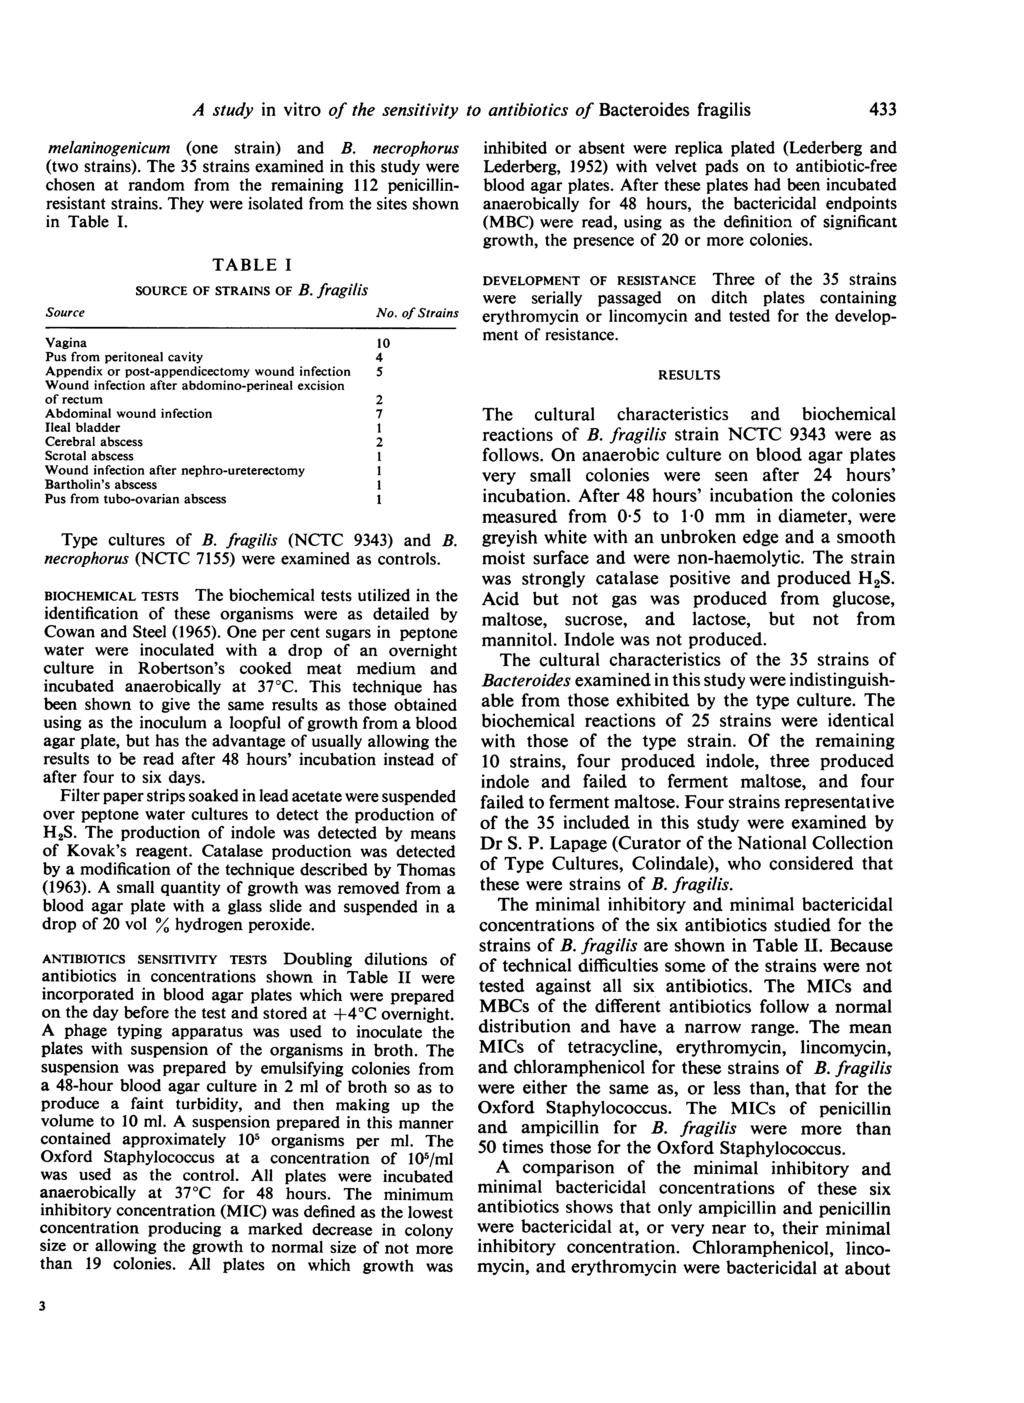 A study in vitro of the sensitivity to antibiotics of Bacteroides fragilis melaninogenicum (one strain) and B. necrophorus (two strains).